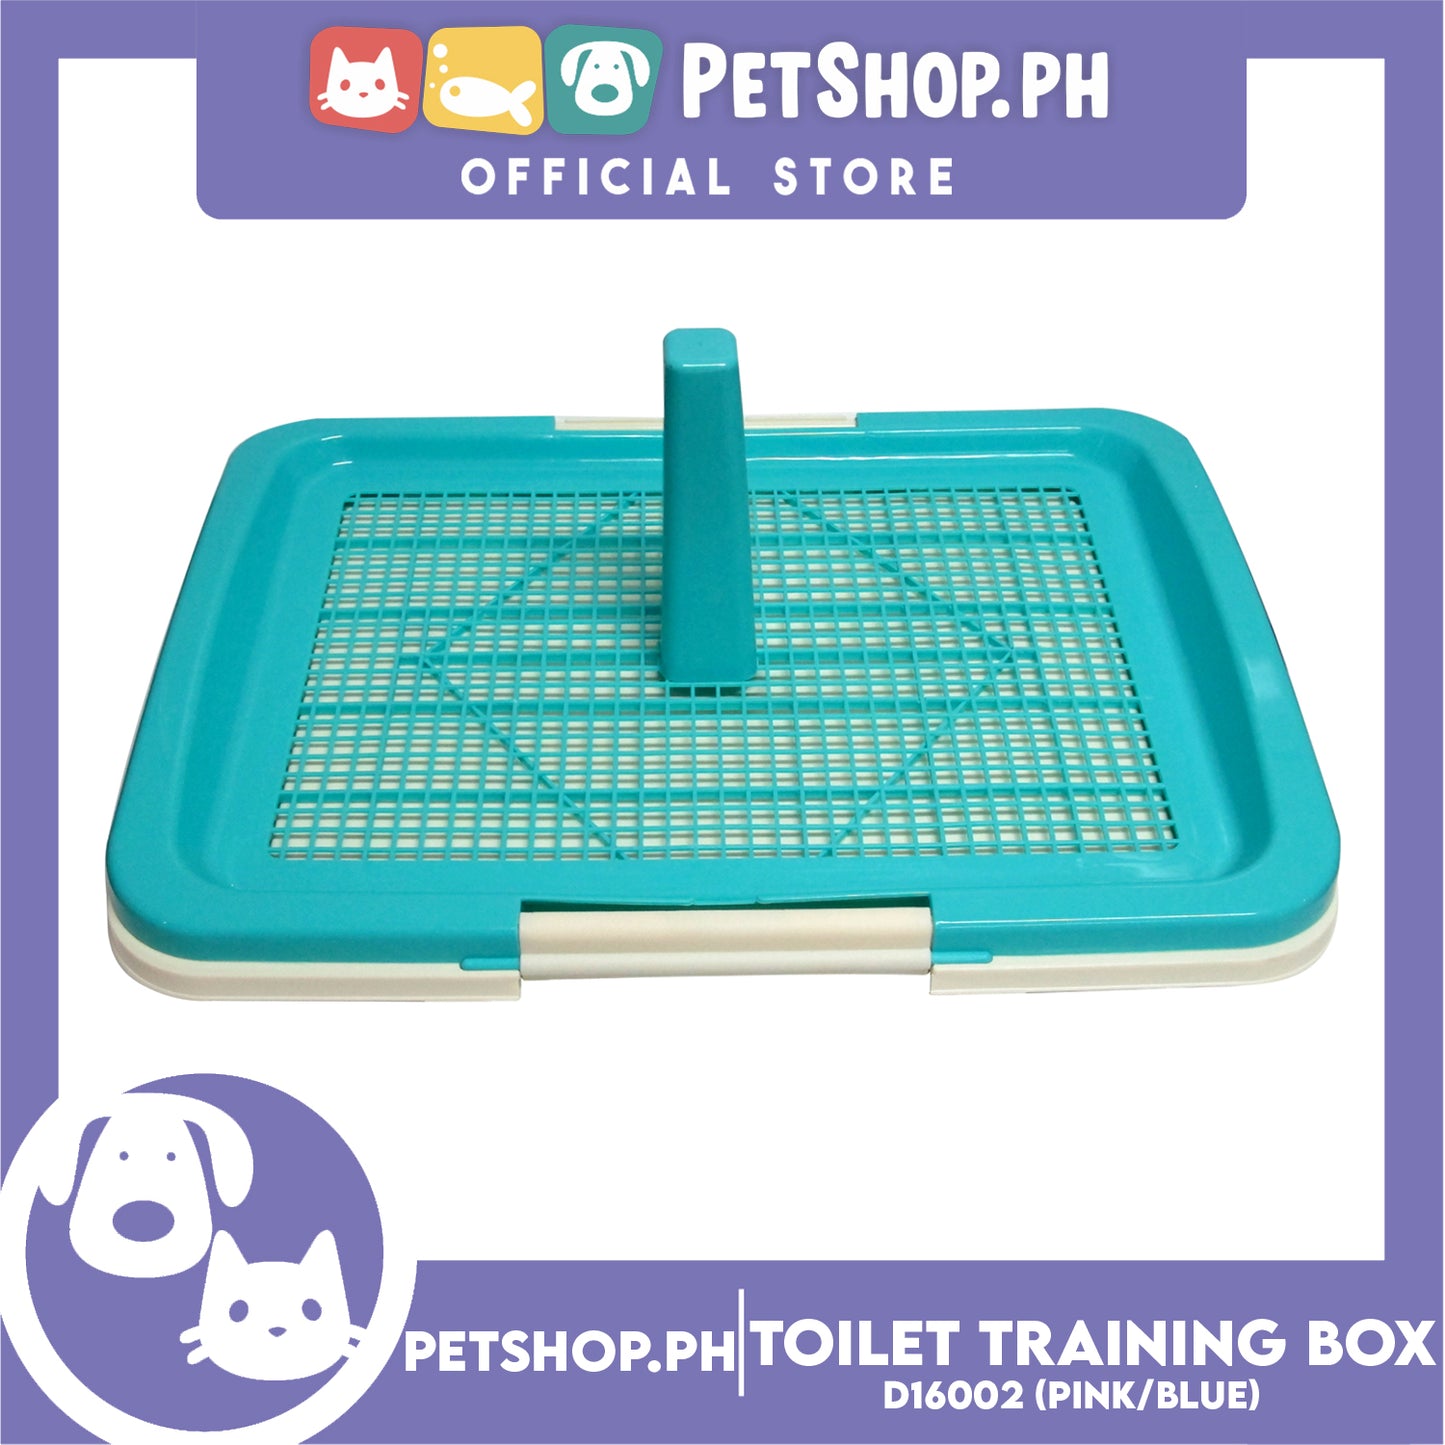 Toilet Training Box D16002